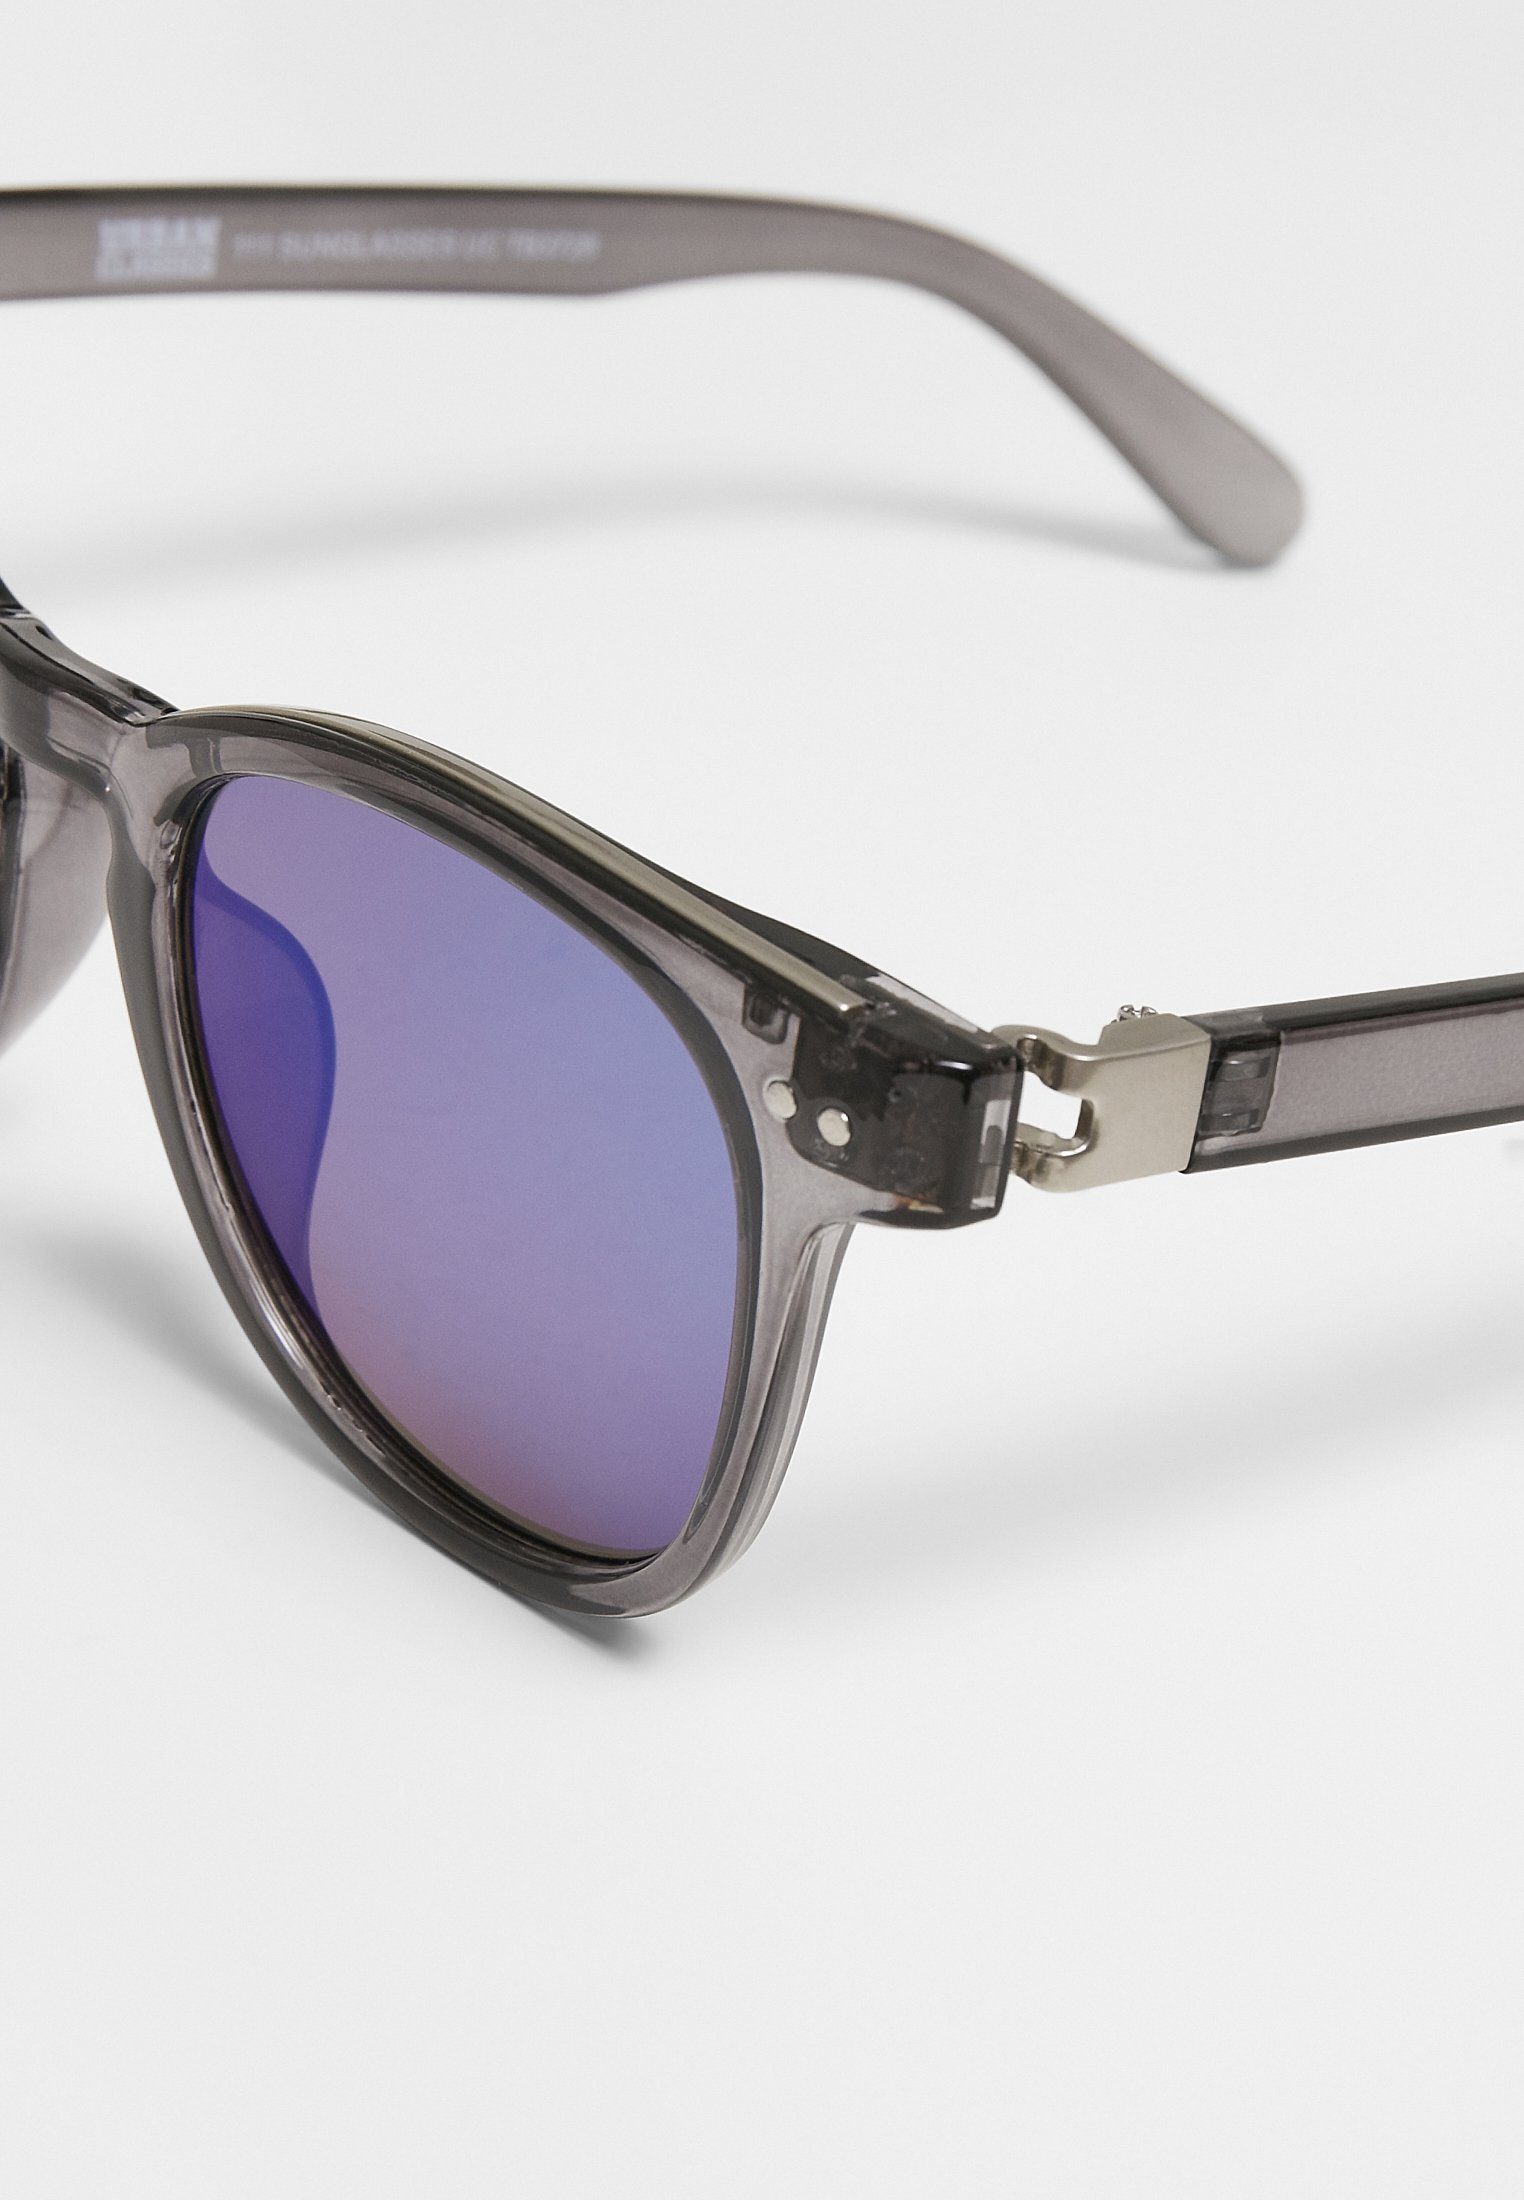 Sunglasses UC URBAN grey/silver Sonnenbrille Accessoires 111 CLASSICS